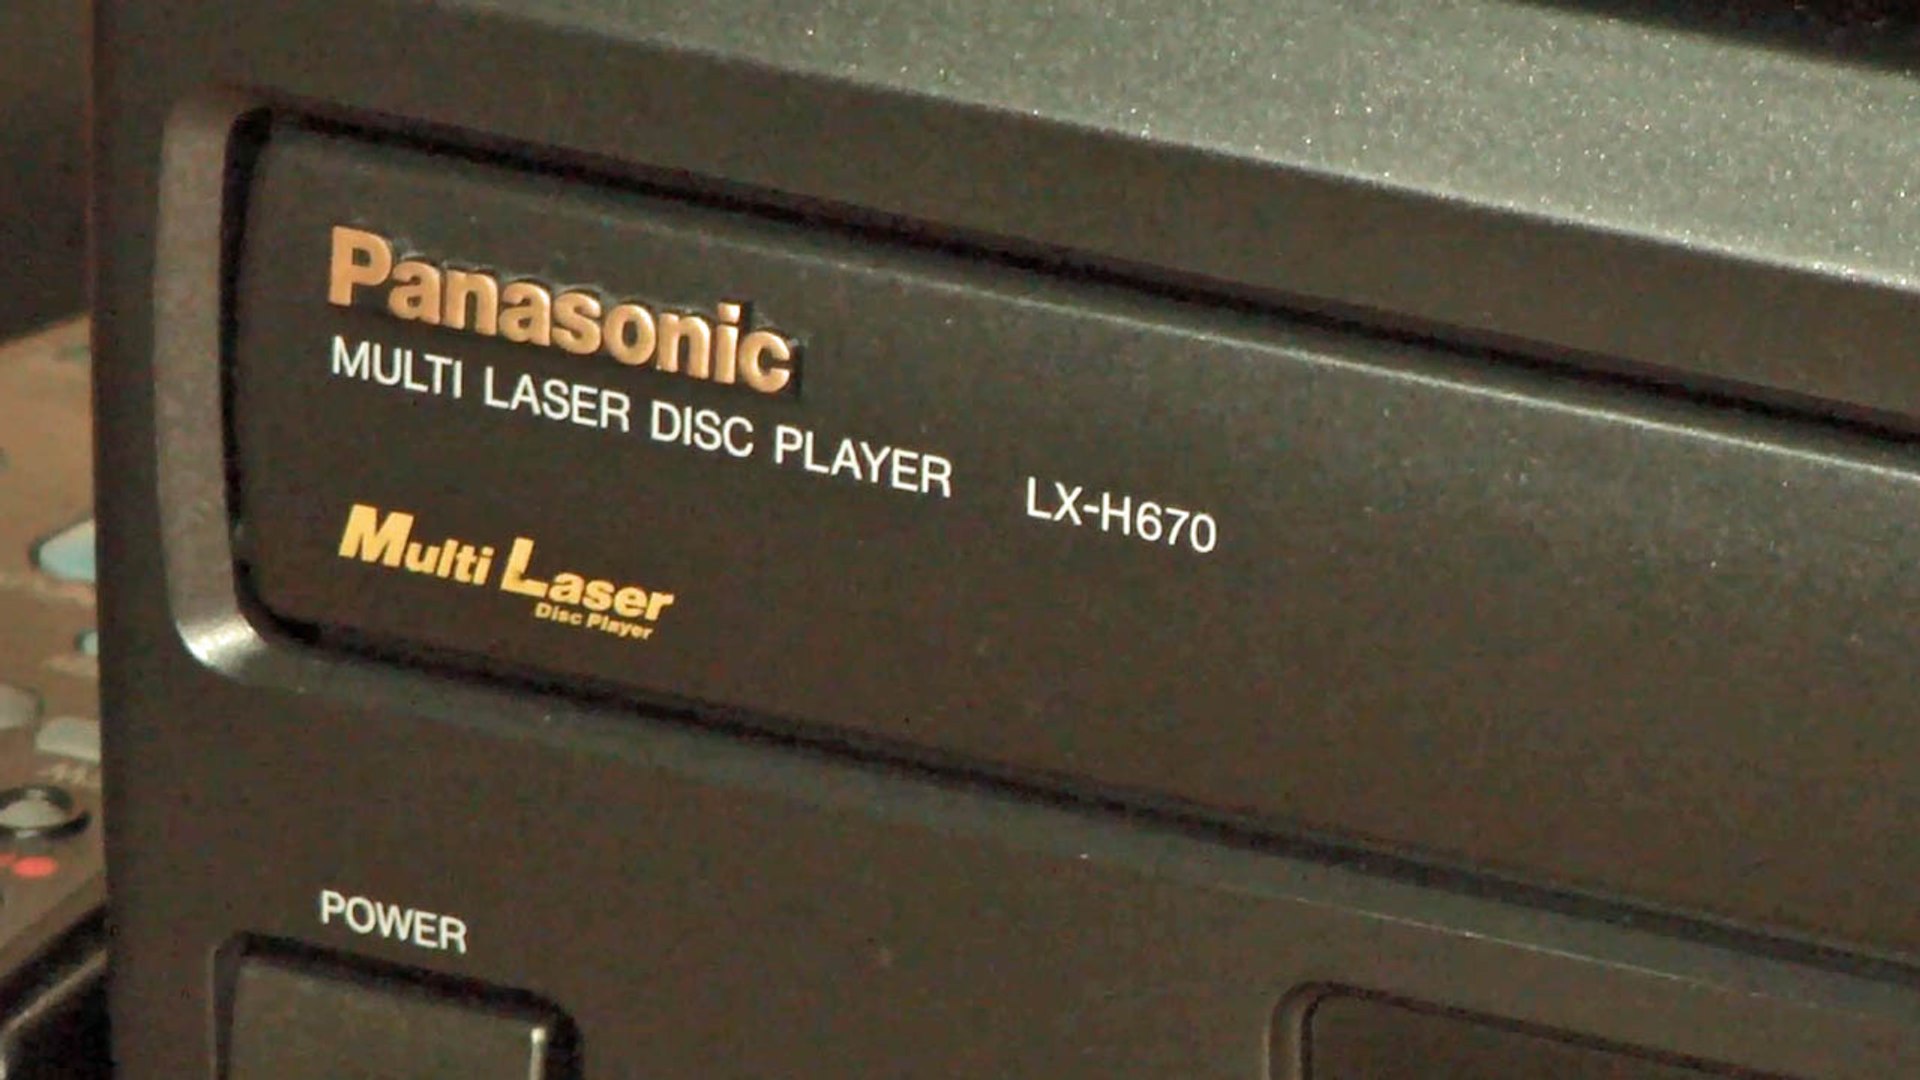 Classic Game Room - PANASONIC LX-H670 LaserDisc Player review